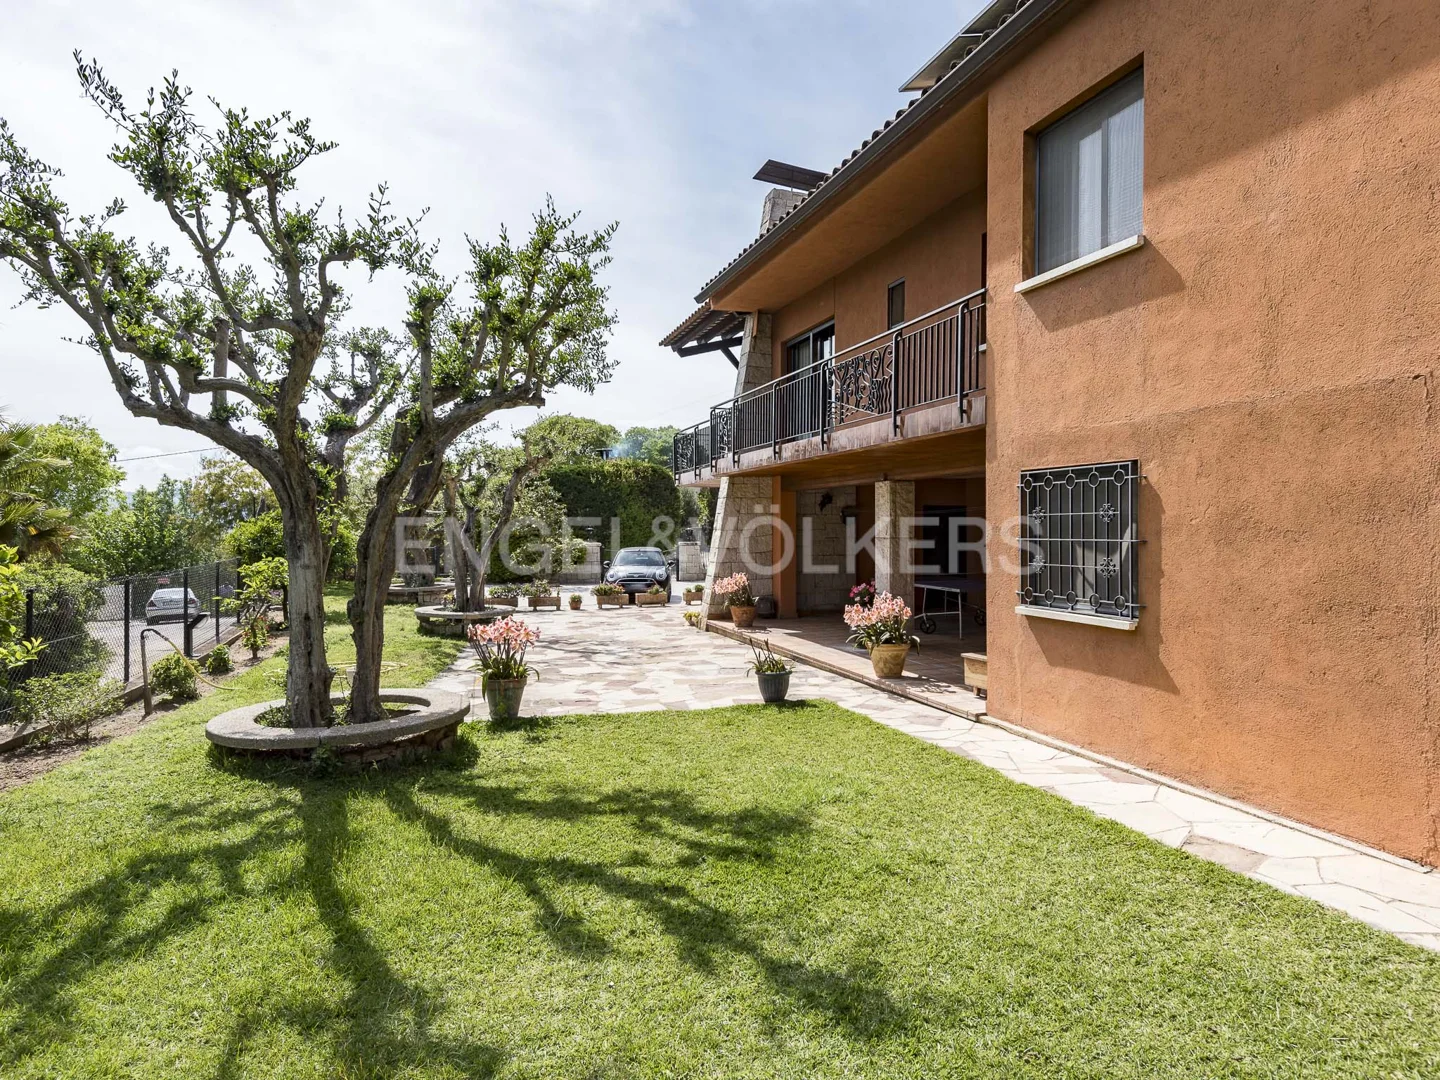 Exclusive villa in Vallensana area of Montcada i Reixac